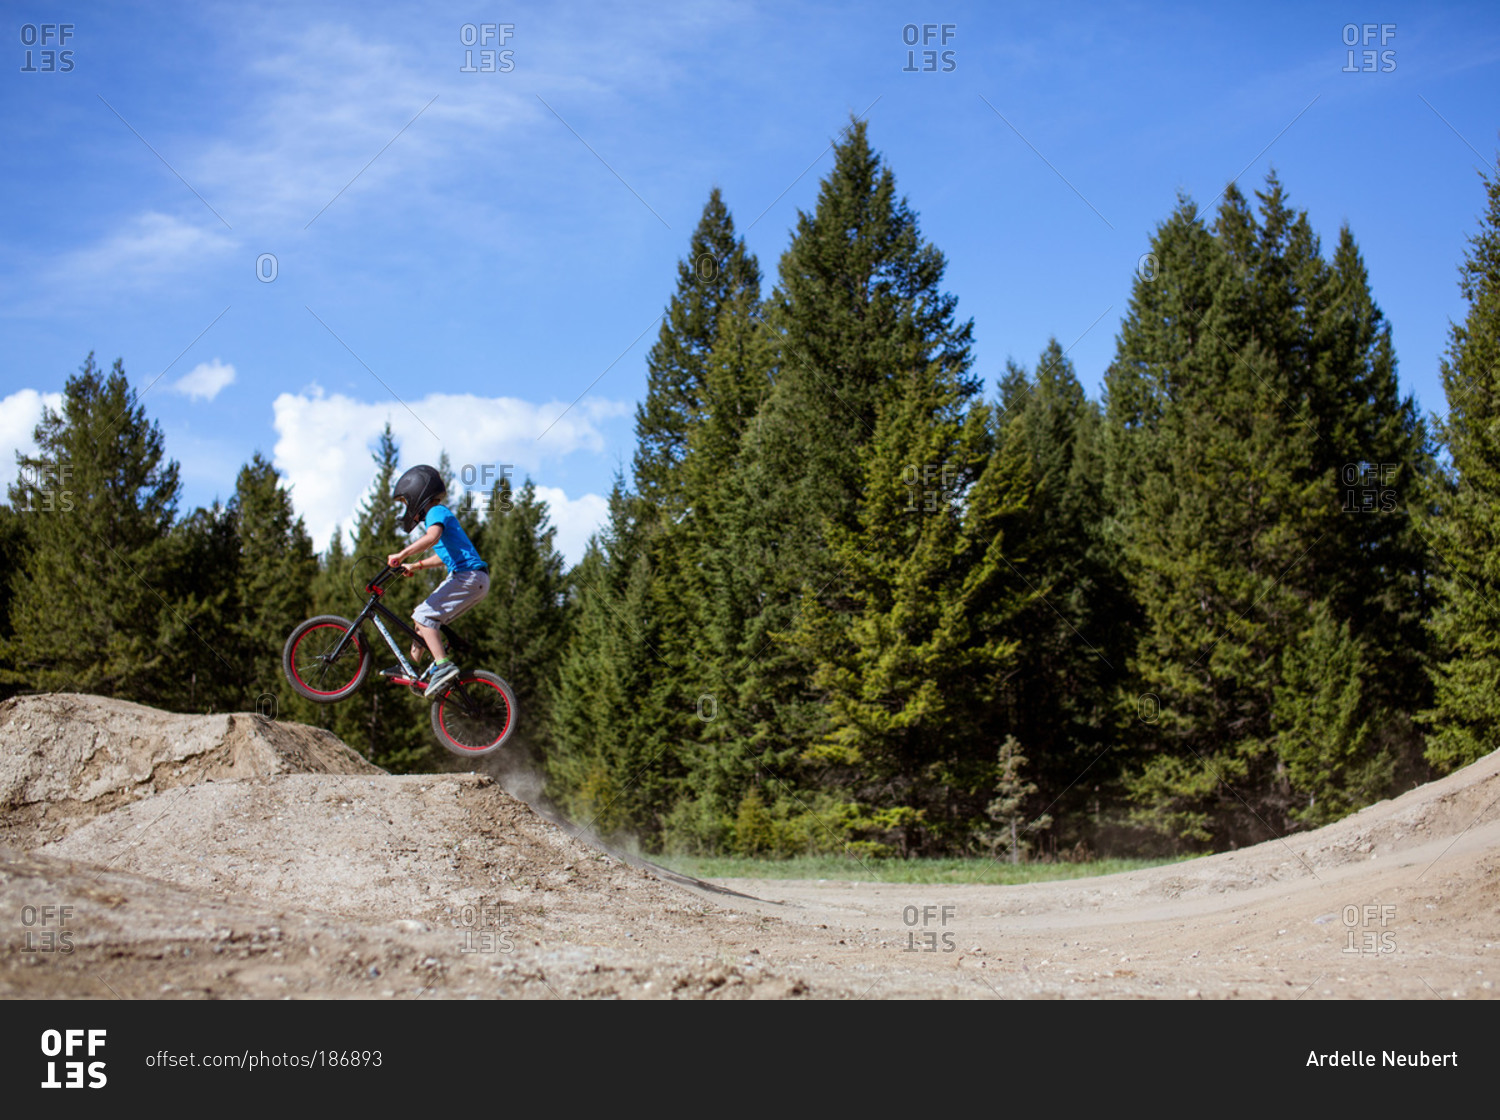 Young boy riding a bmx bike on a dirt track